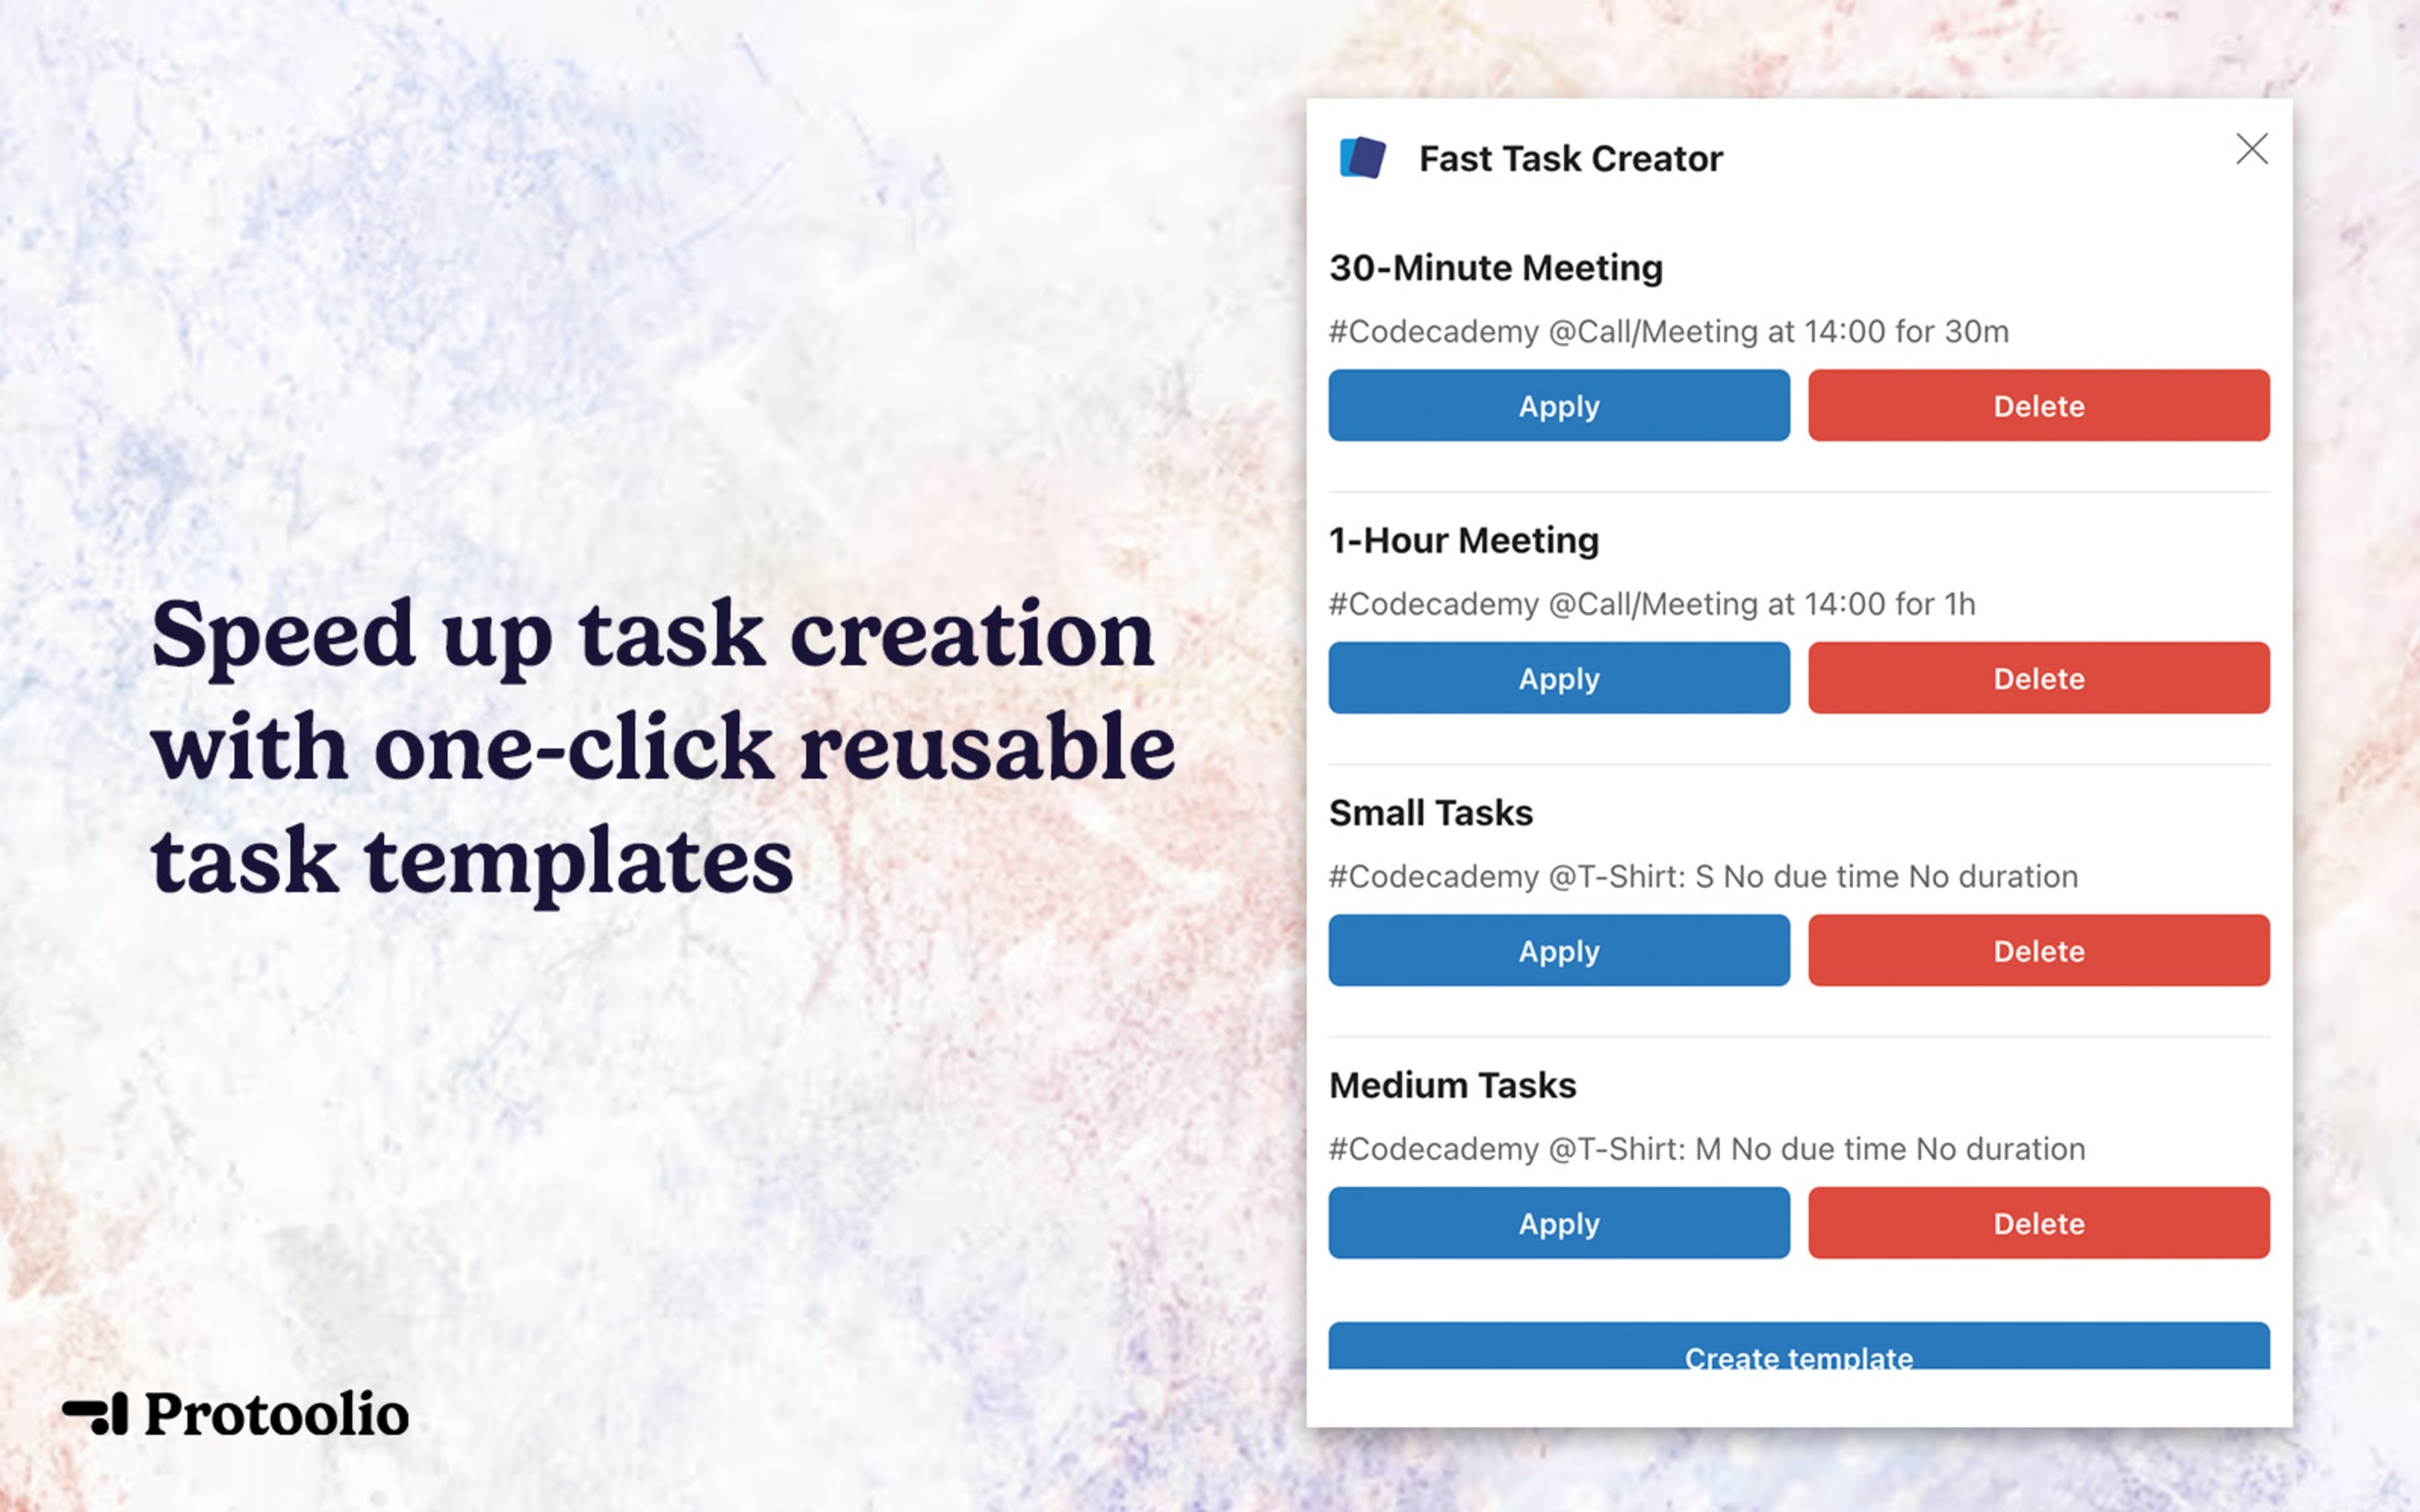 One-click reusable task templates